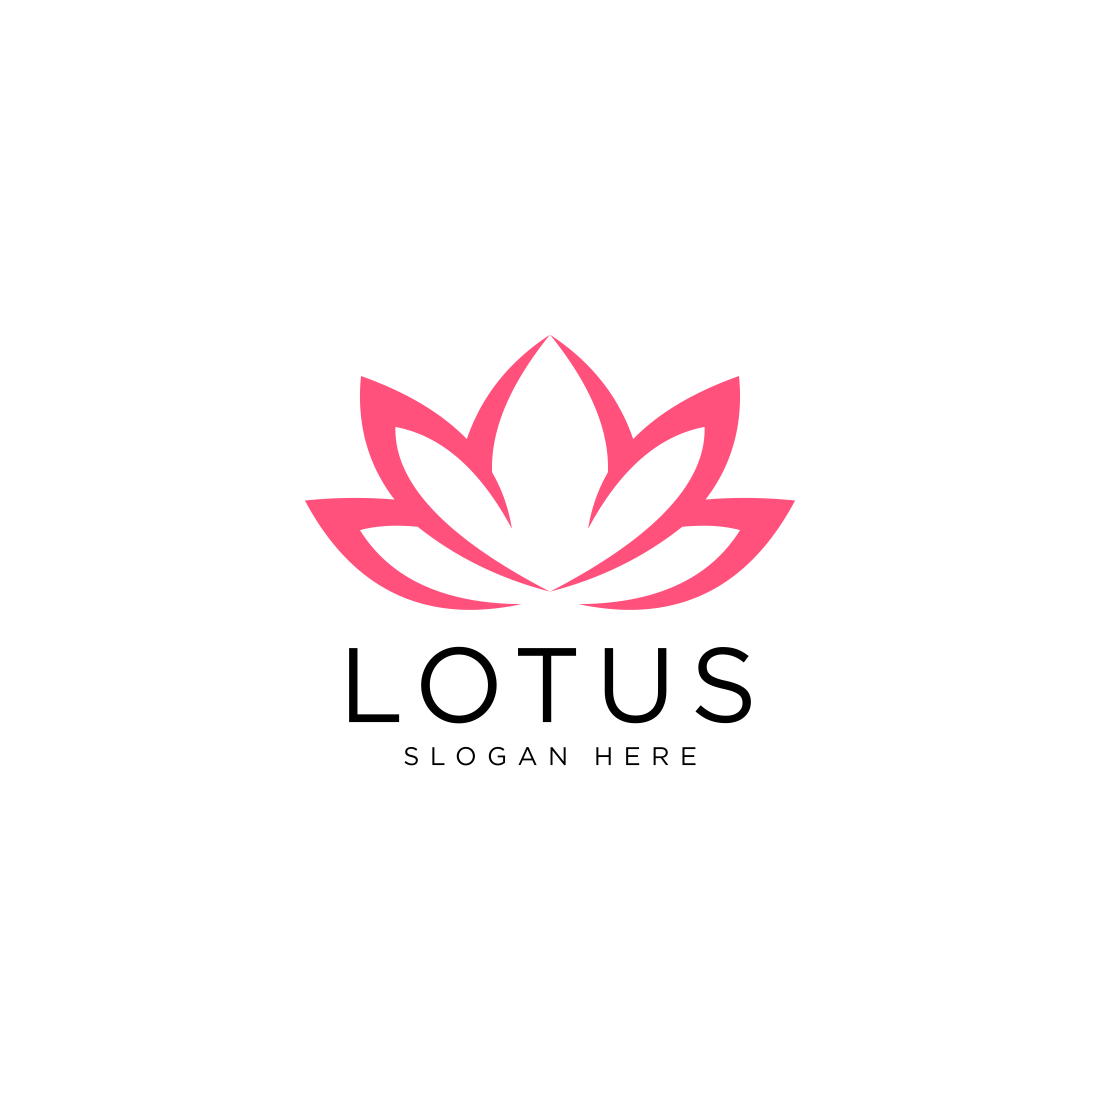 Lotus flower logo vector design cover image.